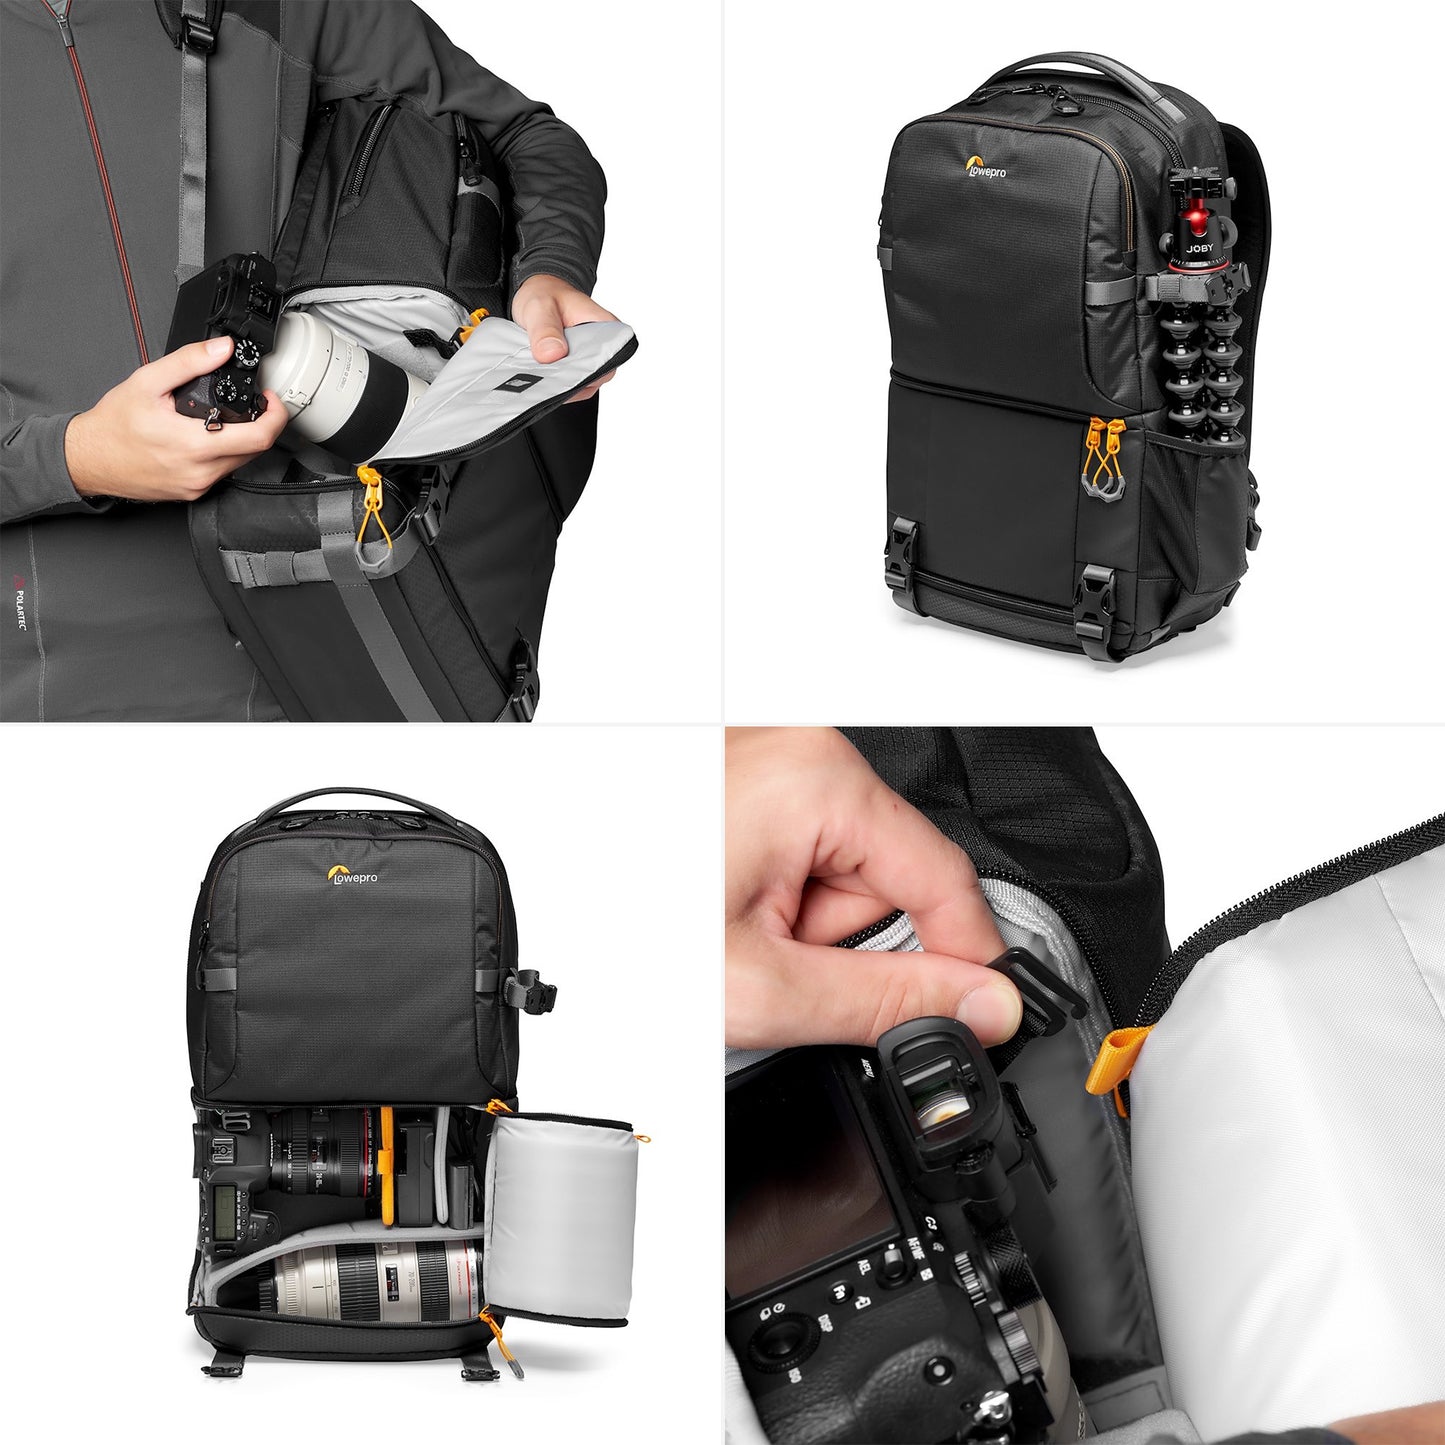 Lowepro Fastpack BP 250 AW III Travel Backpack Bag with Rain Cover for DSLR Mirrorless Cameras Lenses (Black, Gray)